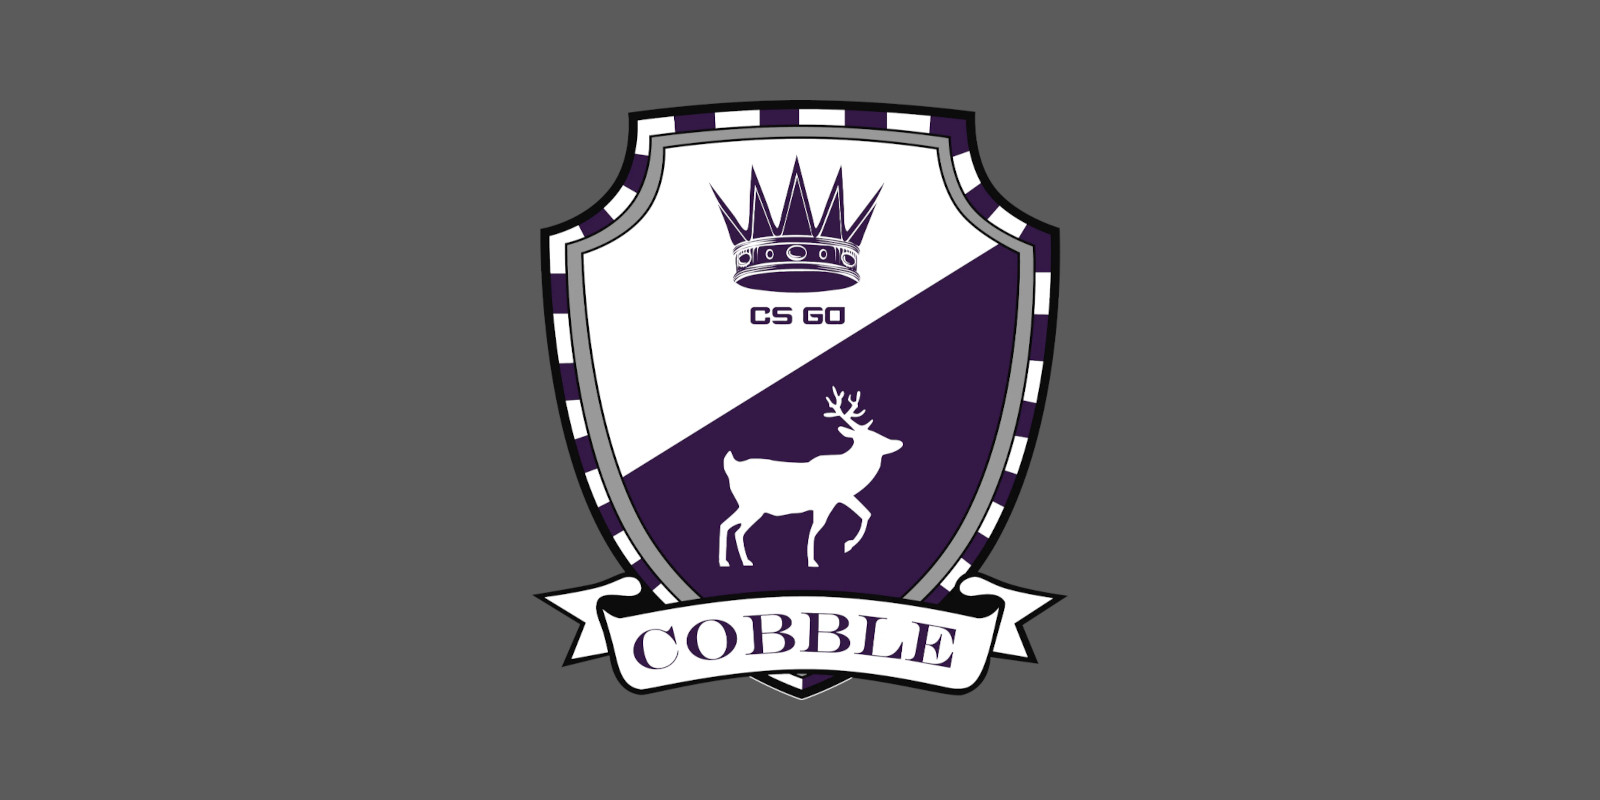 CS:GO - Series 2 - Cobblestone Collectible Pin $564.97